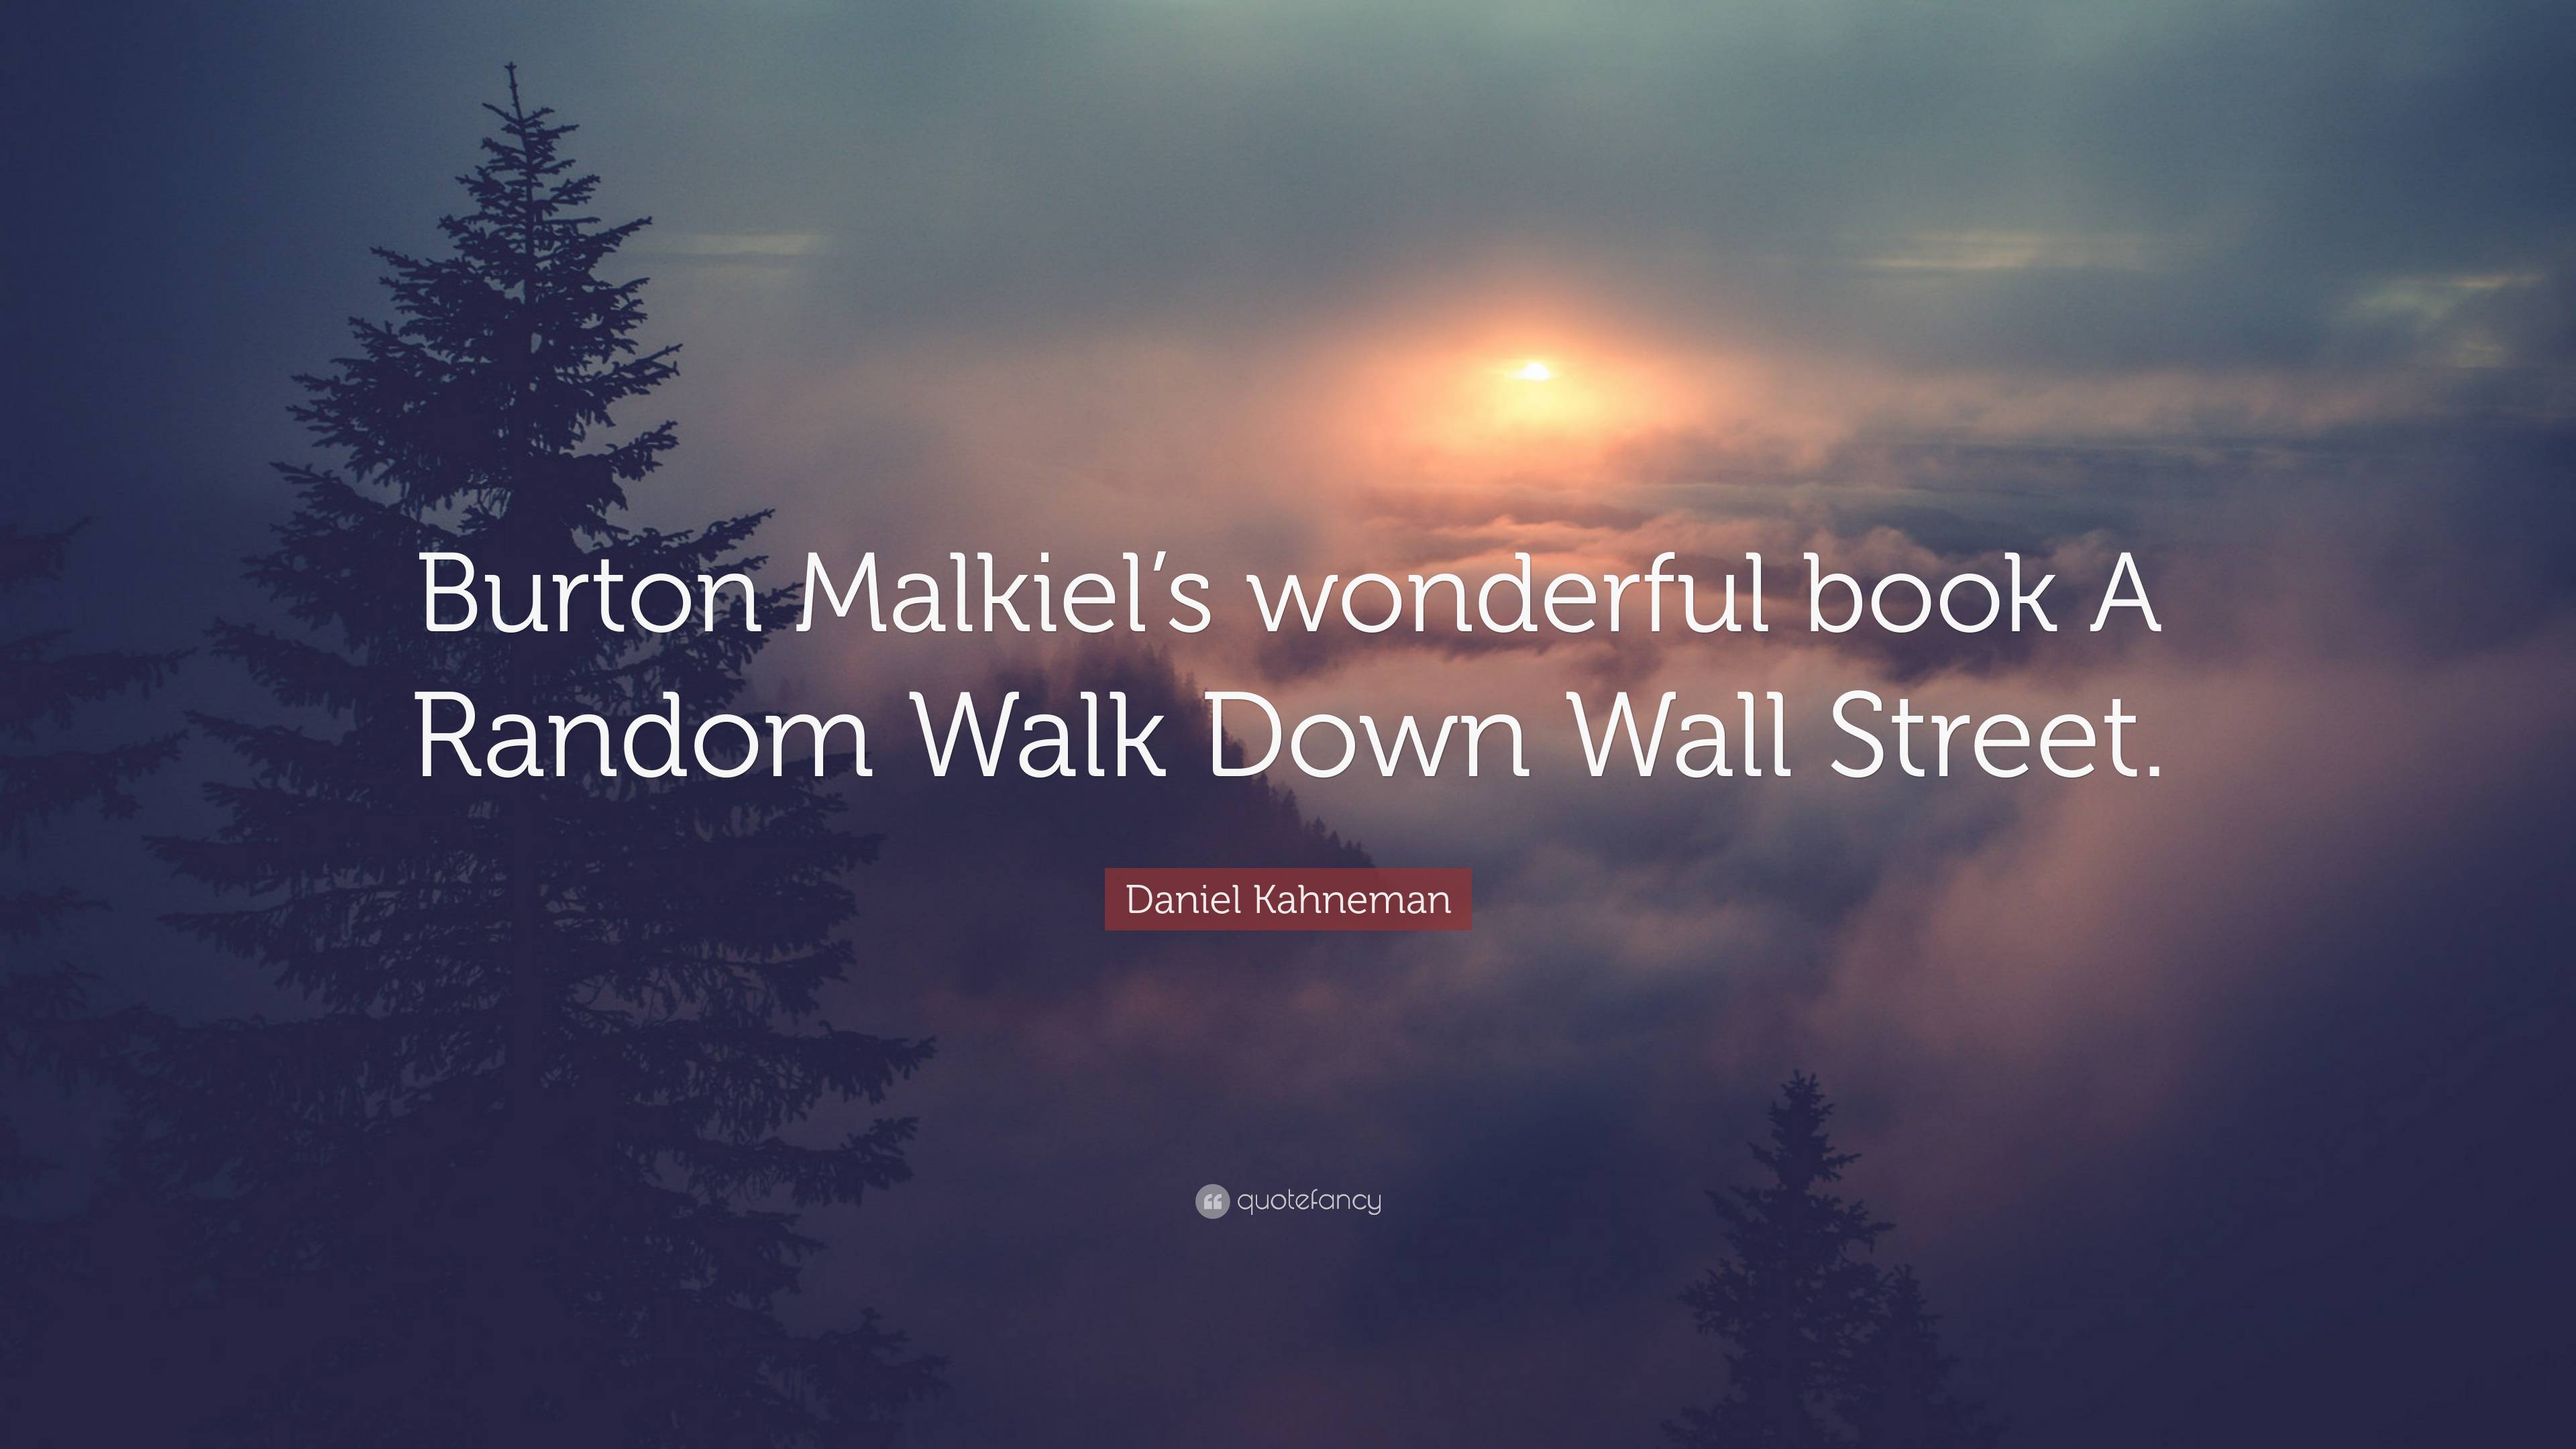 Daniel Kahneman Quote: “Burton Malkiel's wonderful book A Random Walk Down  Wall Street.”